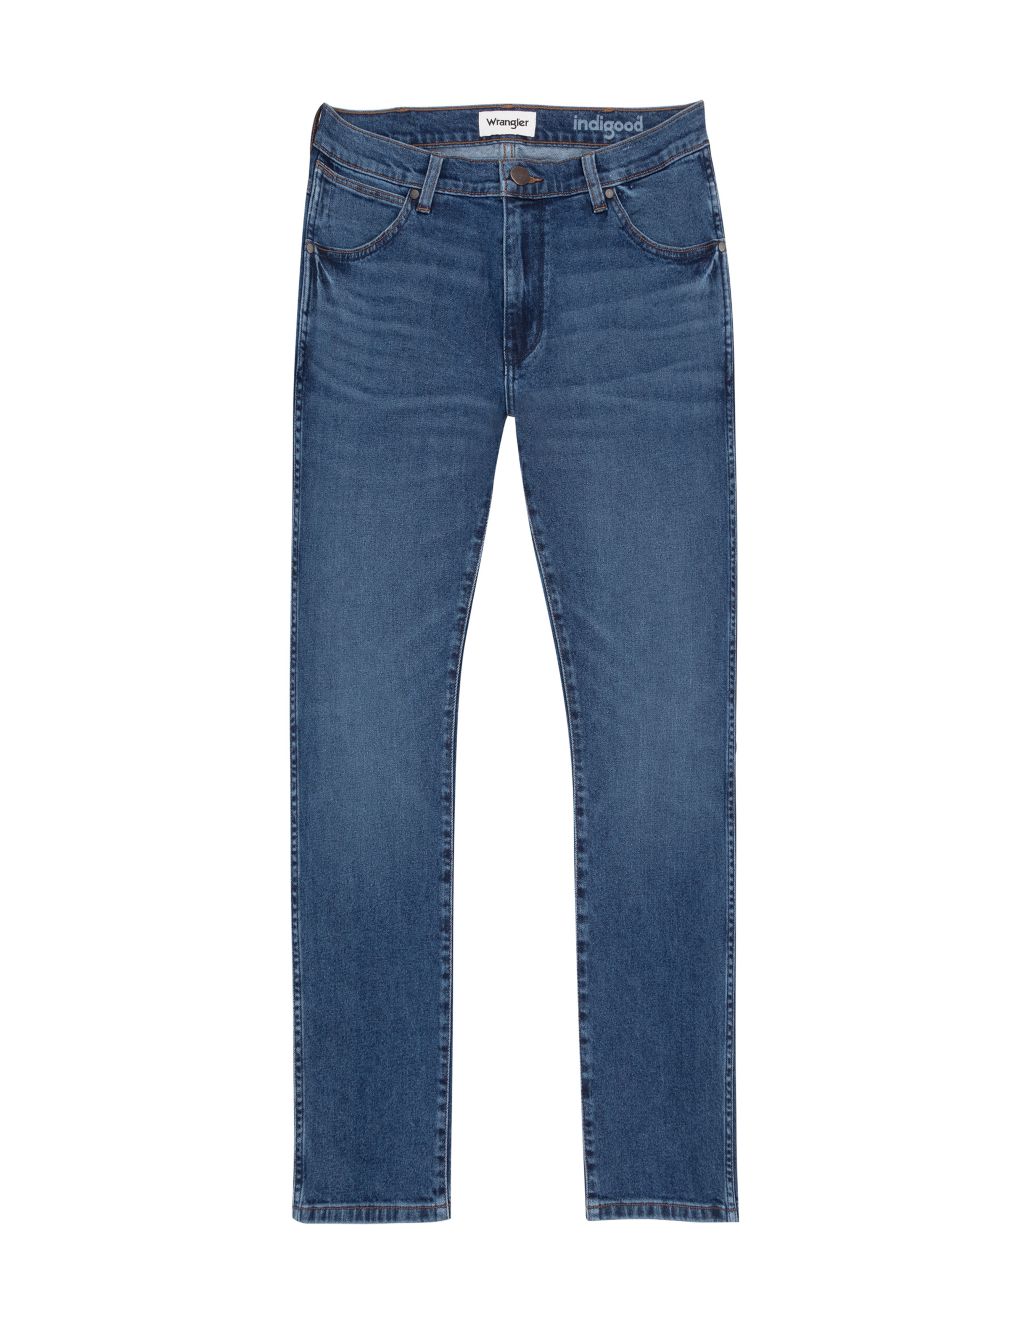 Larston Tapered Slim Fit 5 Pocket Jeans image 2